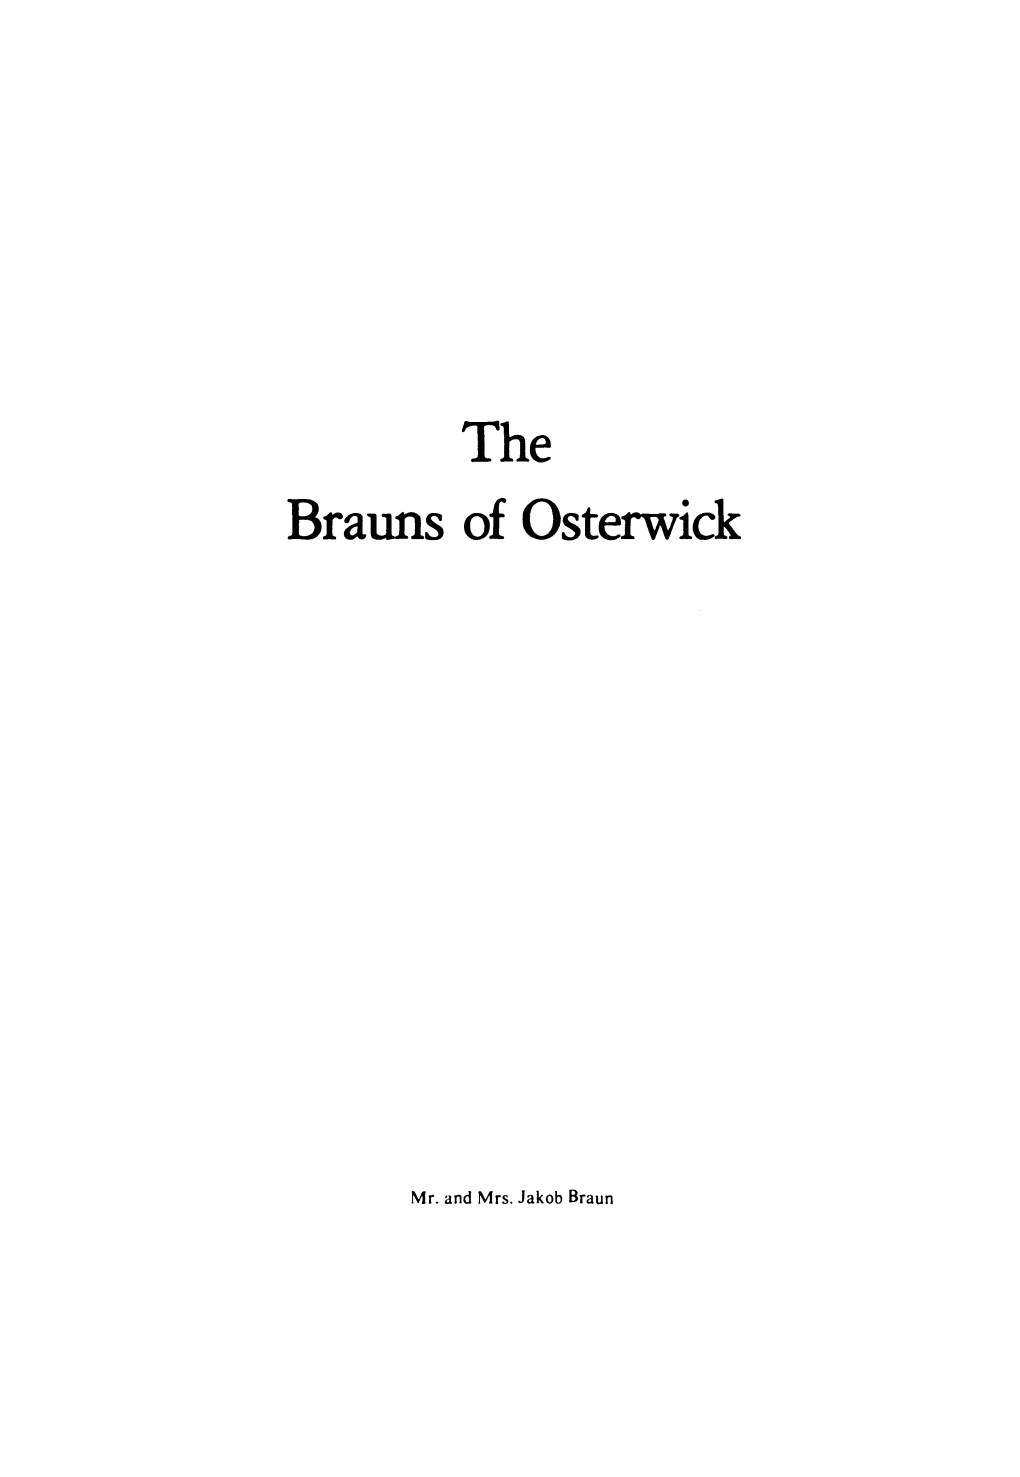 Brauns of Osterwick